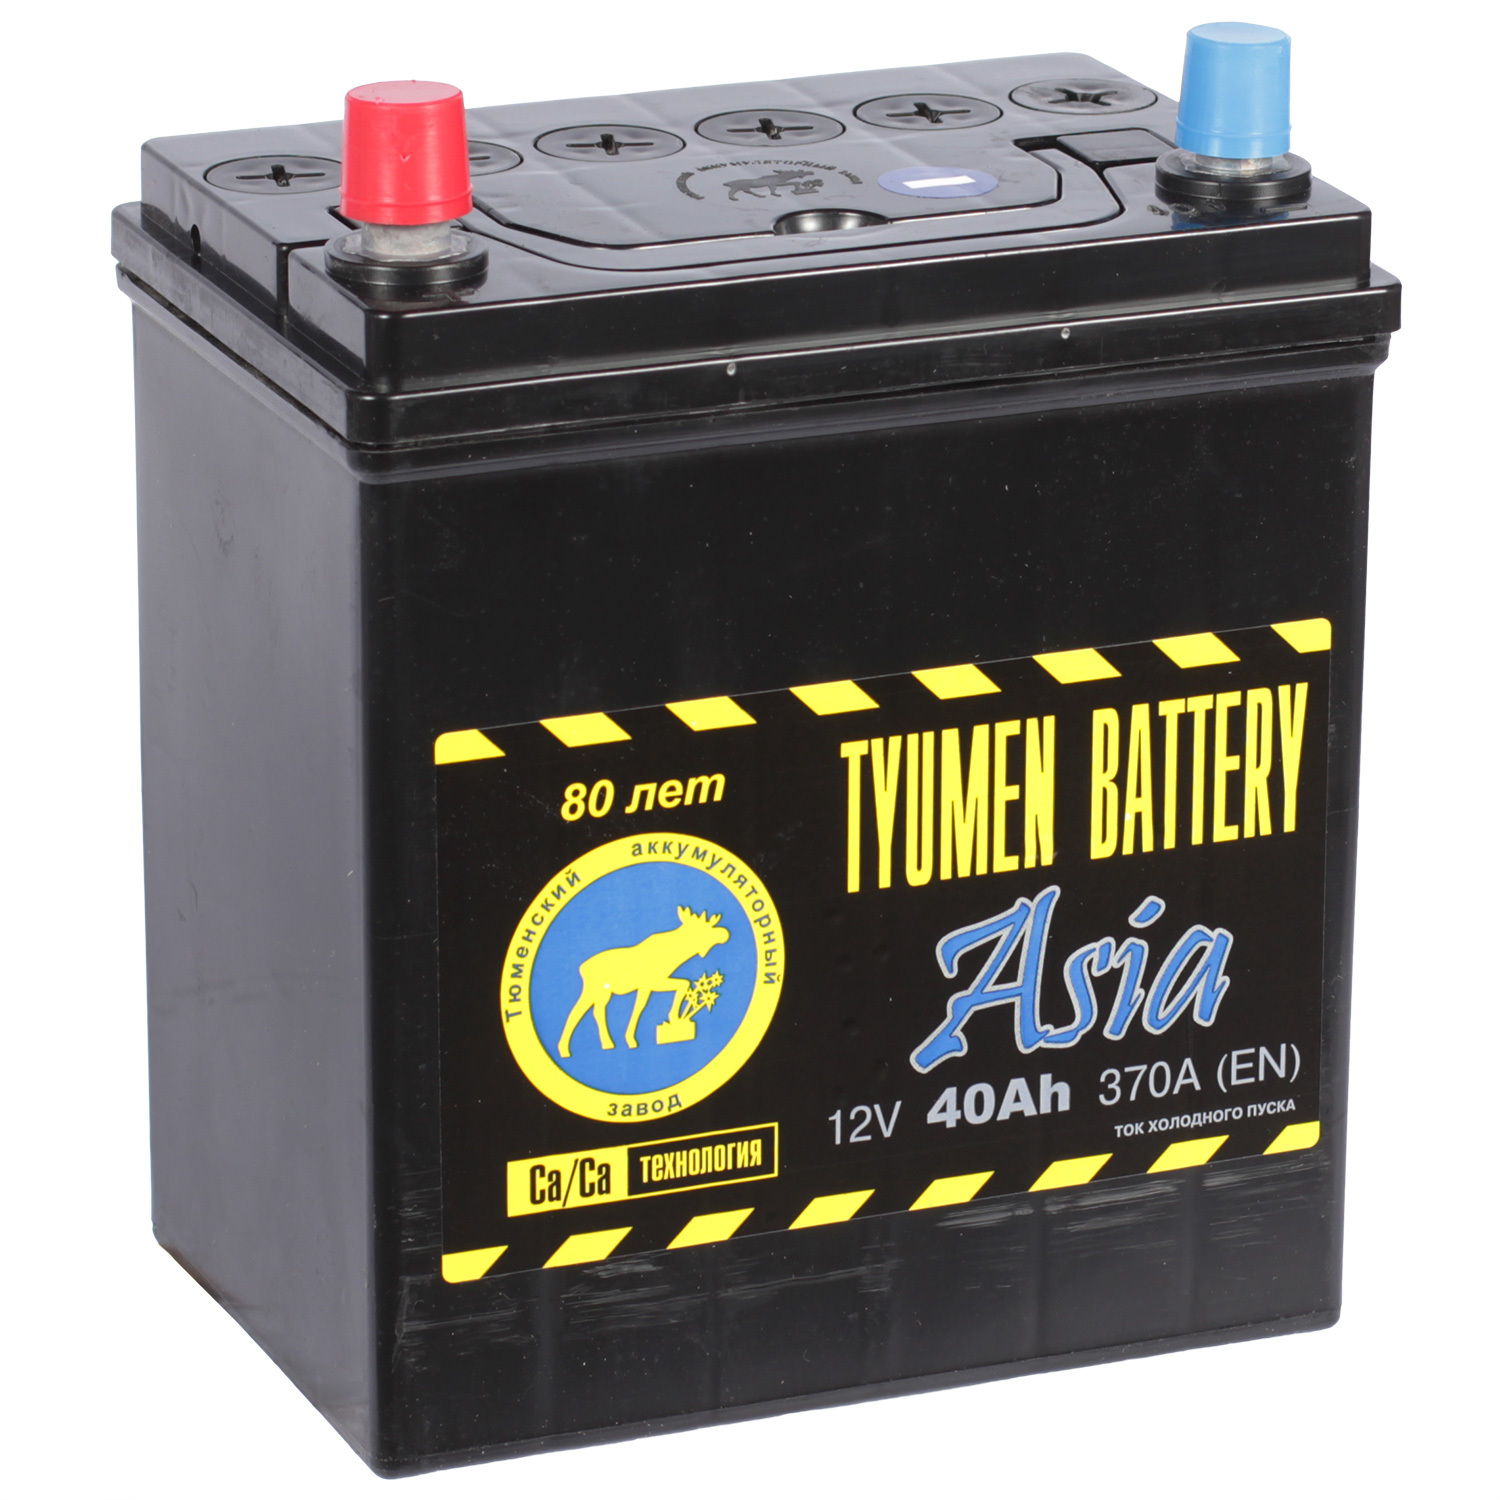 Tyumen Battery Автомобильный аккумулятор Tyumen Battery Asia 40 Ач прямая полярность B19R tyumen battery автомобильный аккумулятор tyumen battery 61 ач прямая полярность lb2